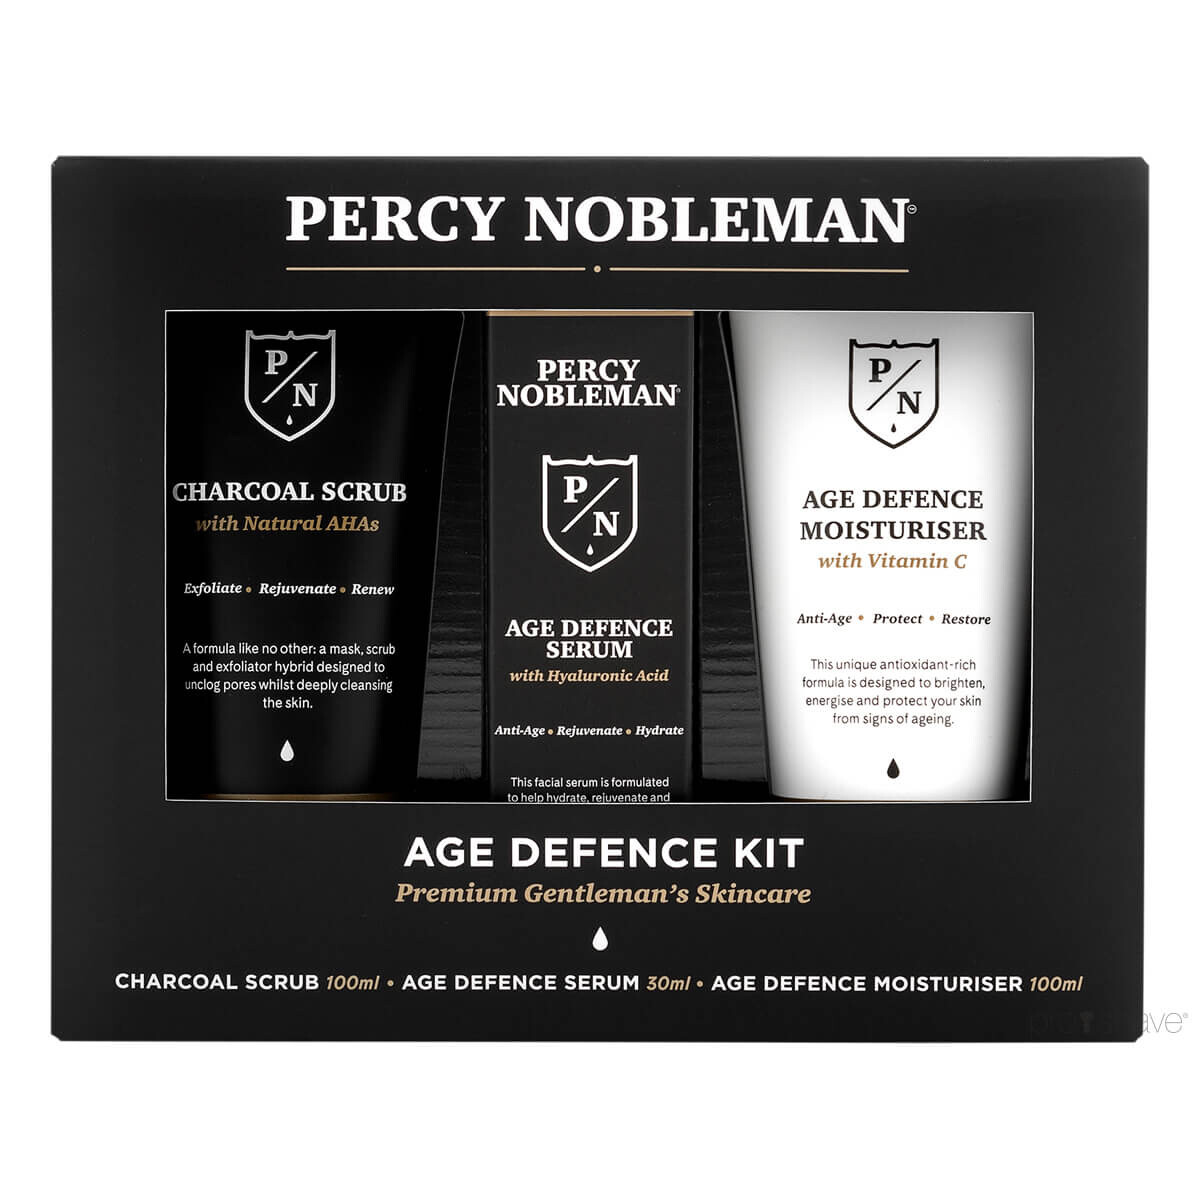 Se Percy Nobleman Age Defence Kit hos Proshave